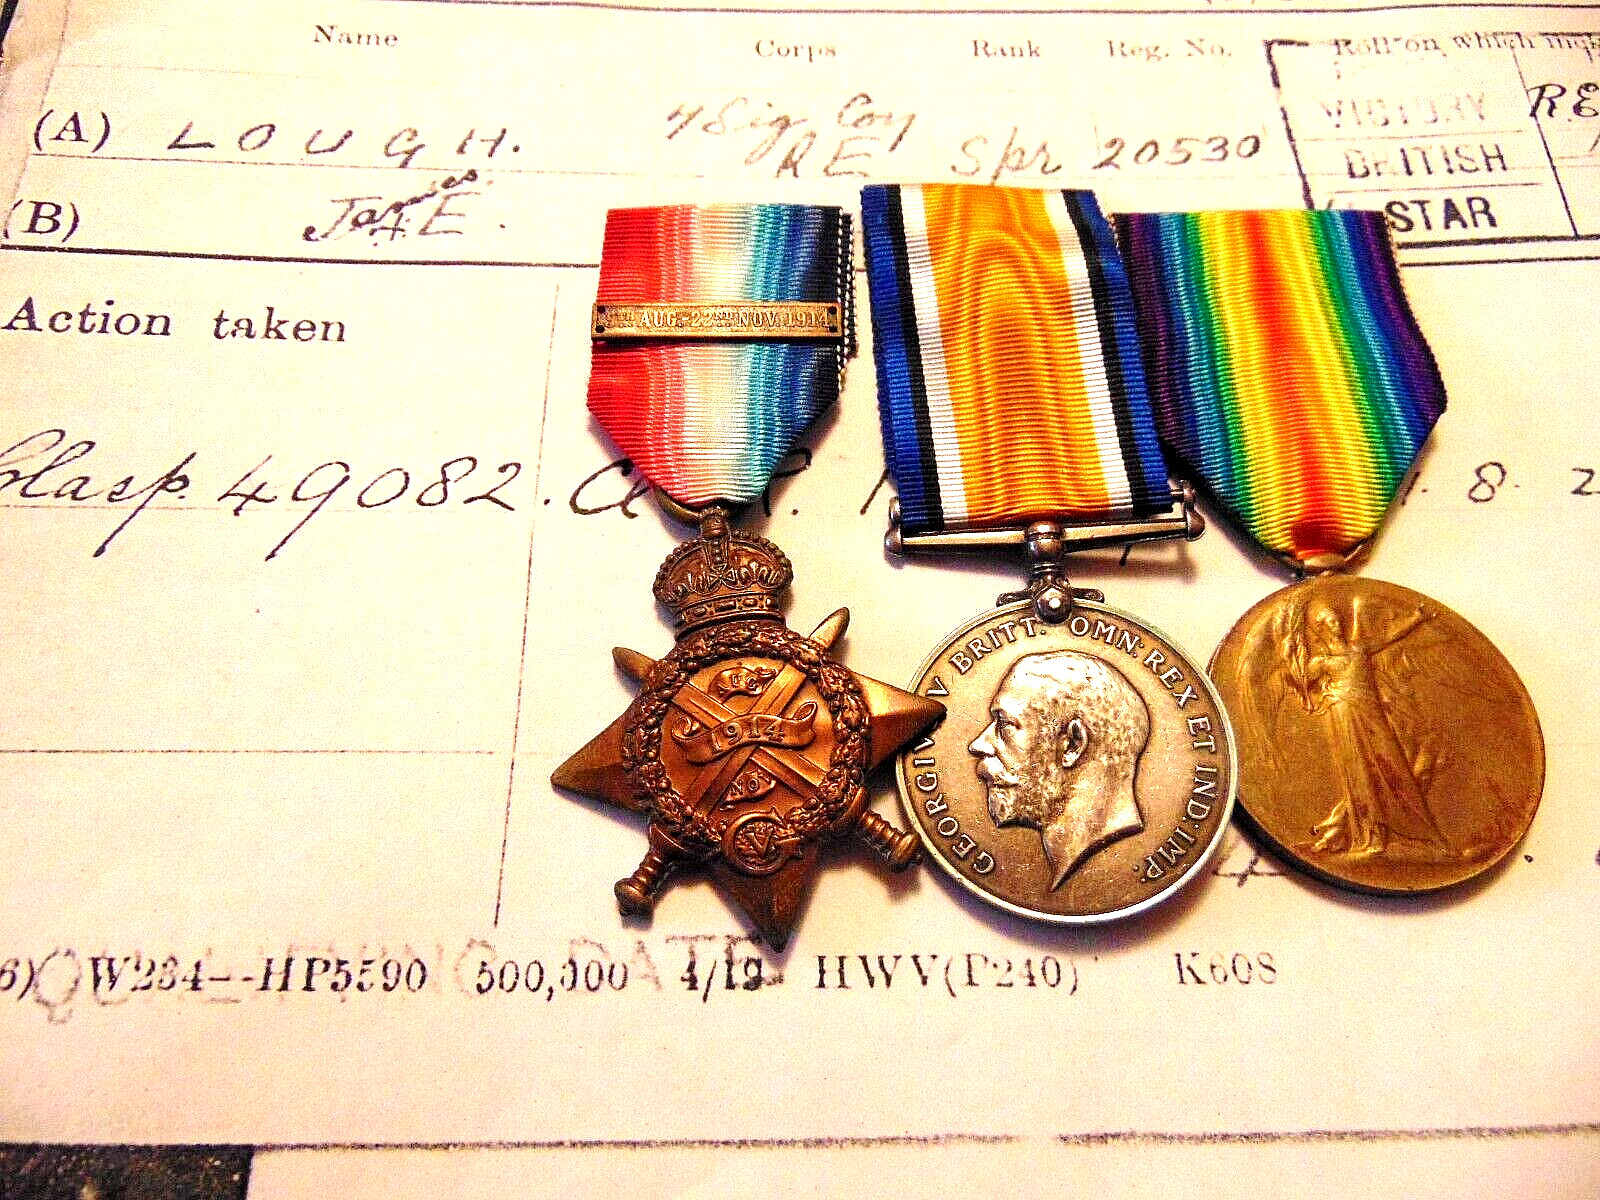 Ww1 Great Britain 20530 Sapr J E Lough Re Mons Star Bar, Service Victory Medals